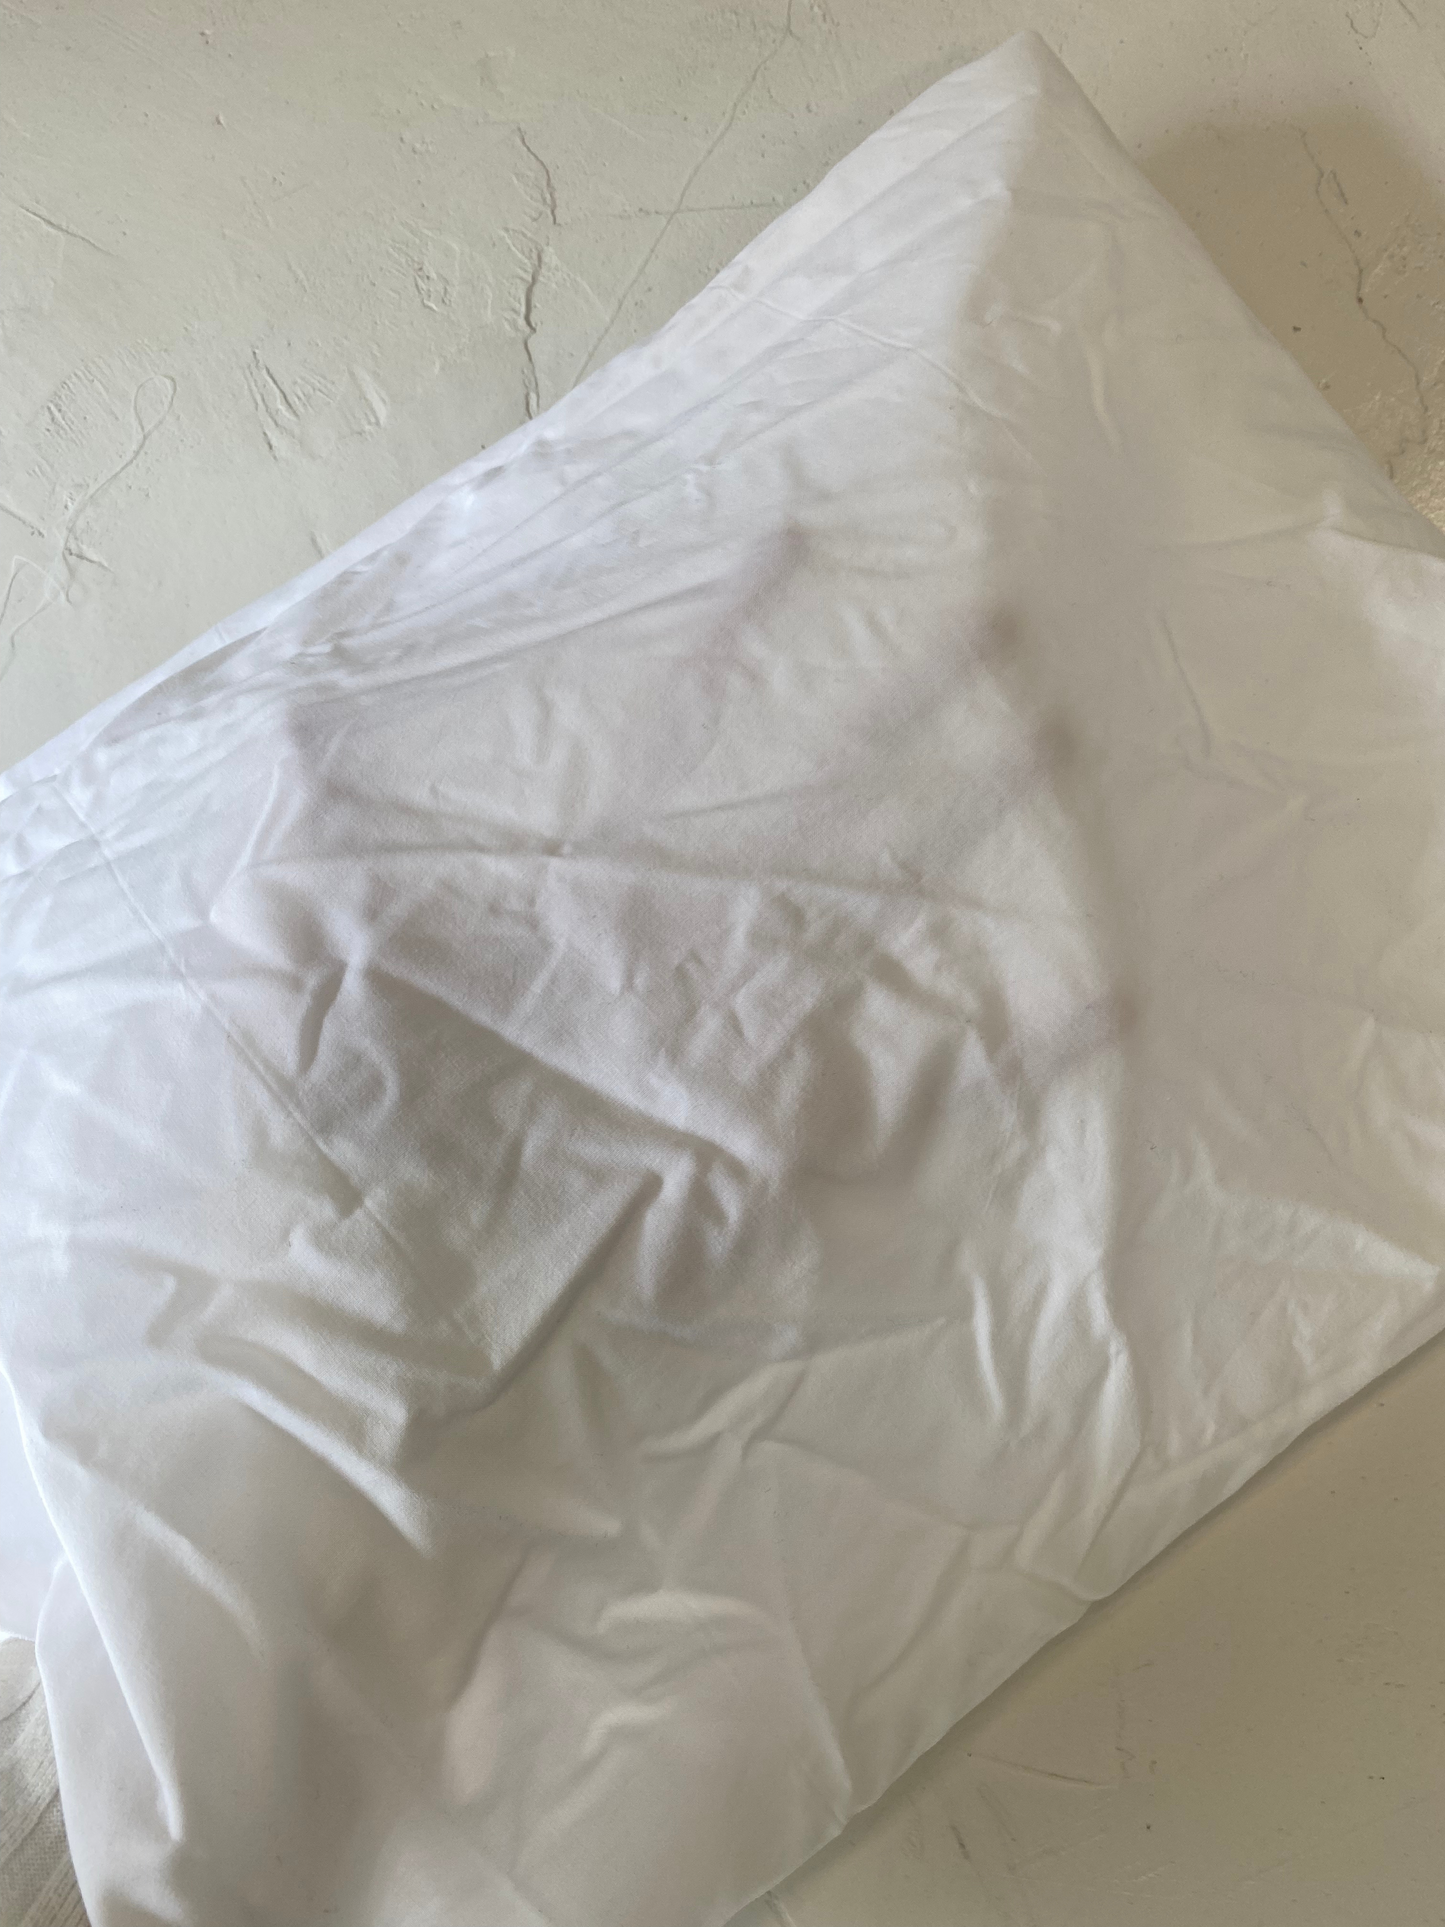 Fabric, Linen Sheets 100% Cotton, White